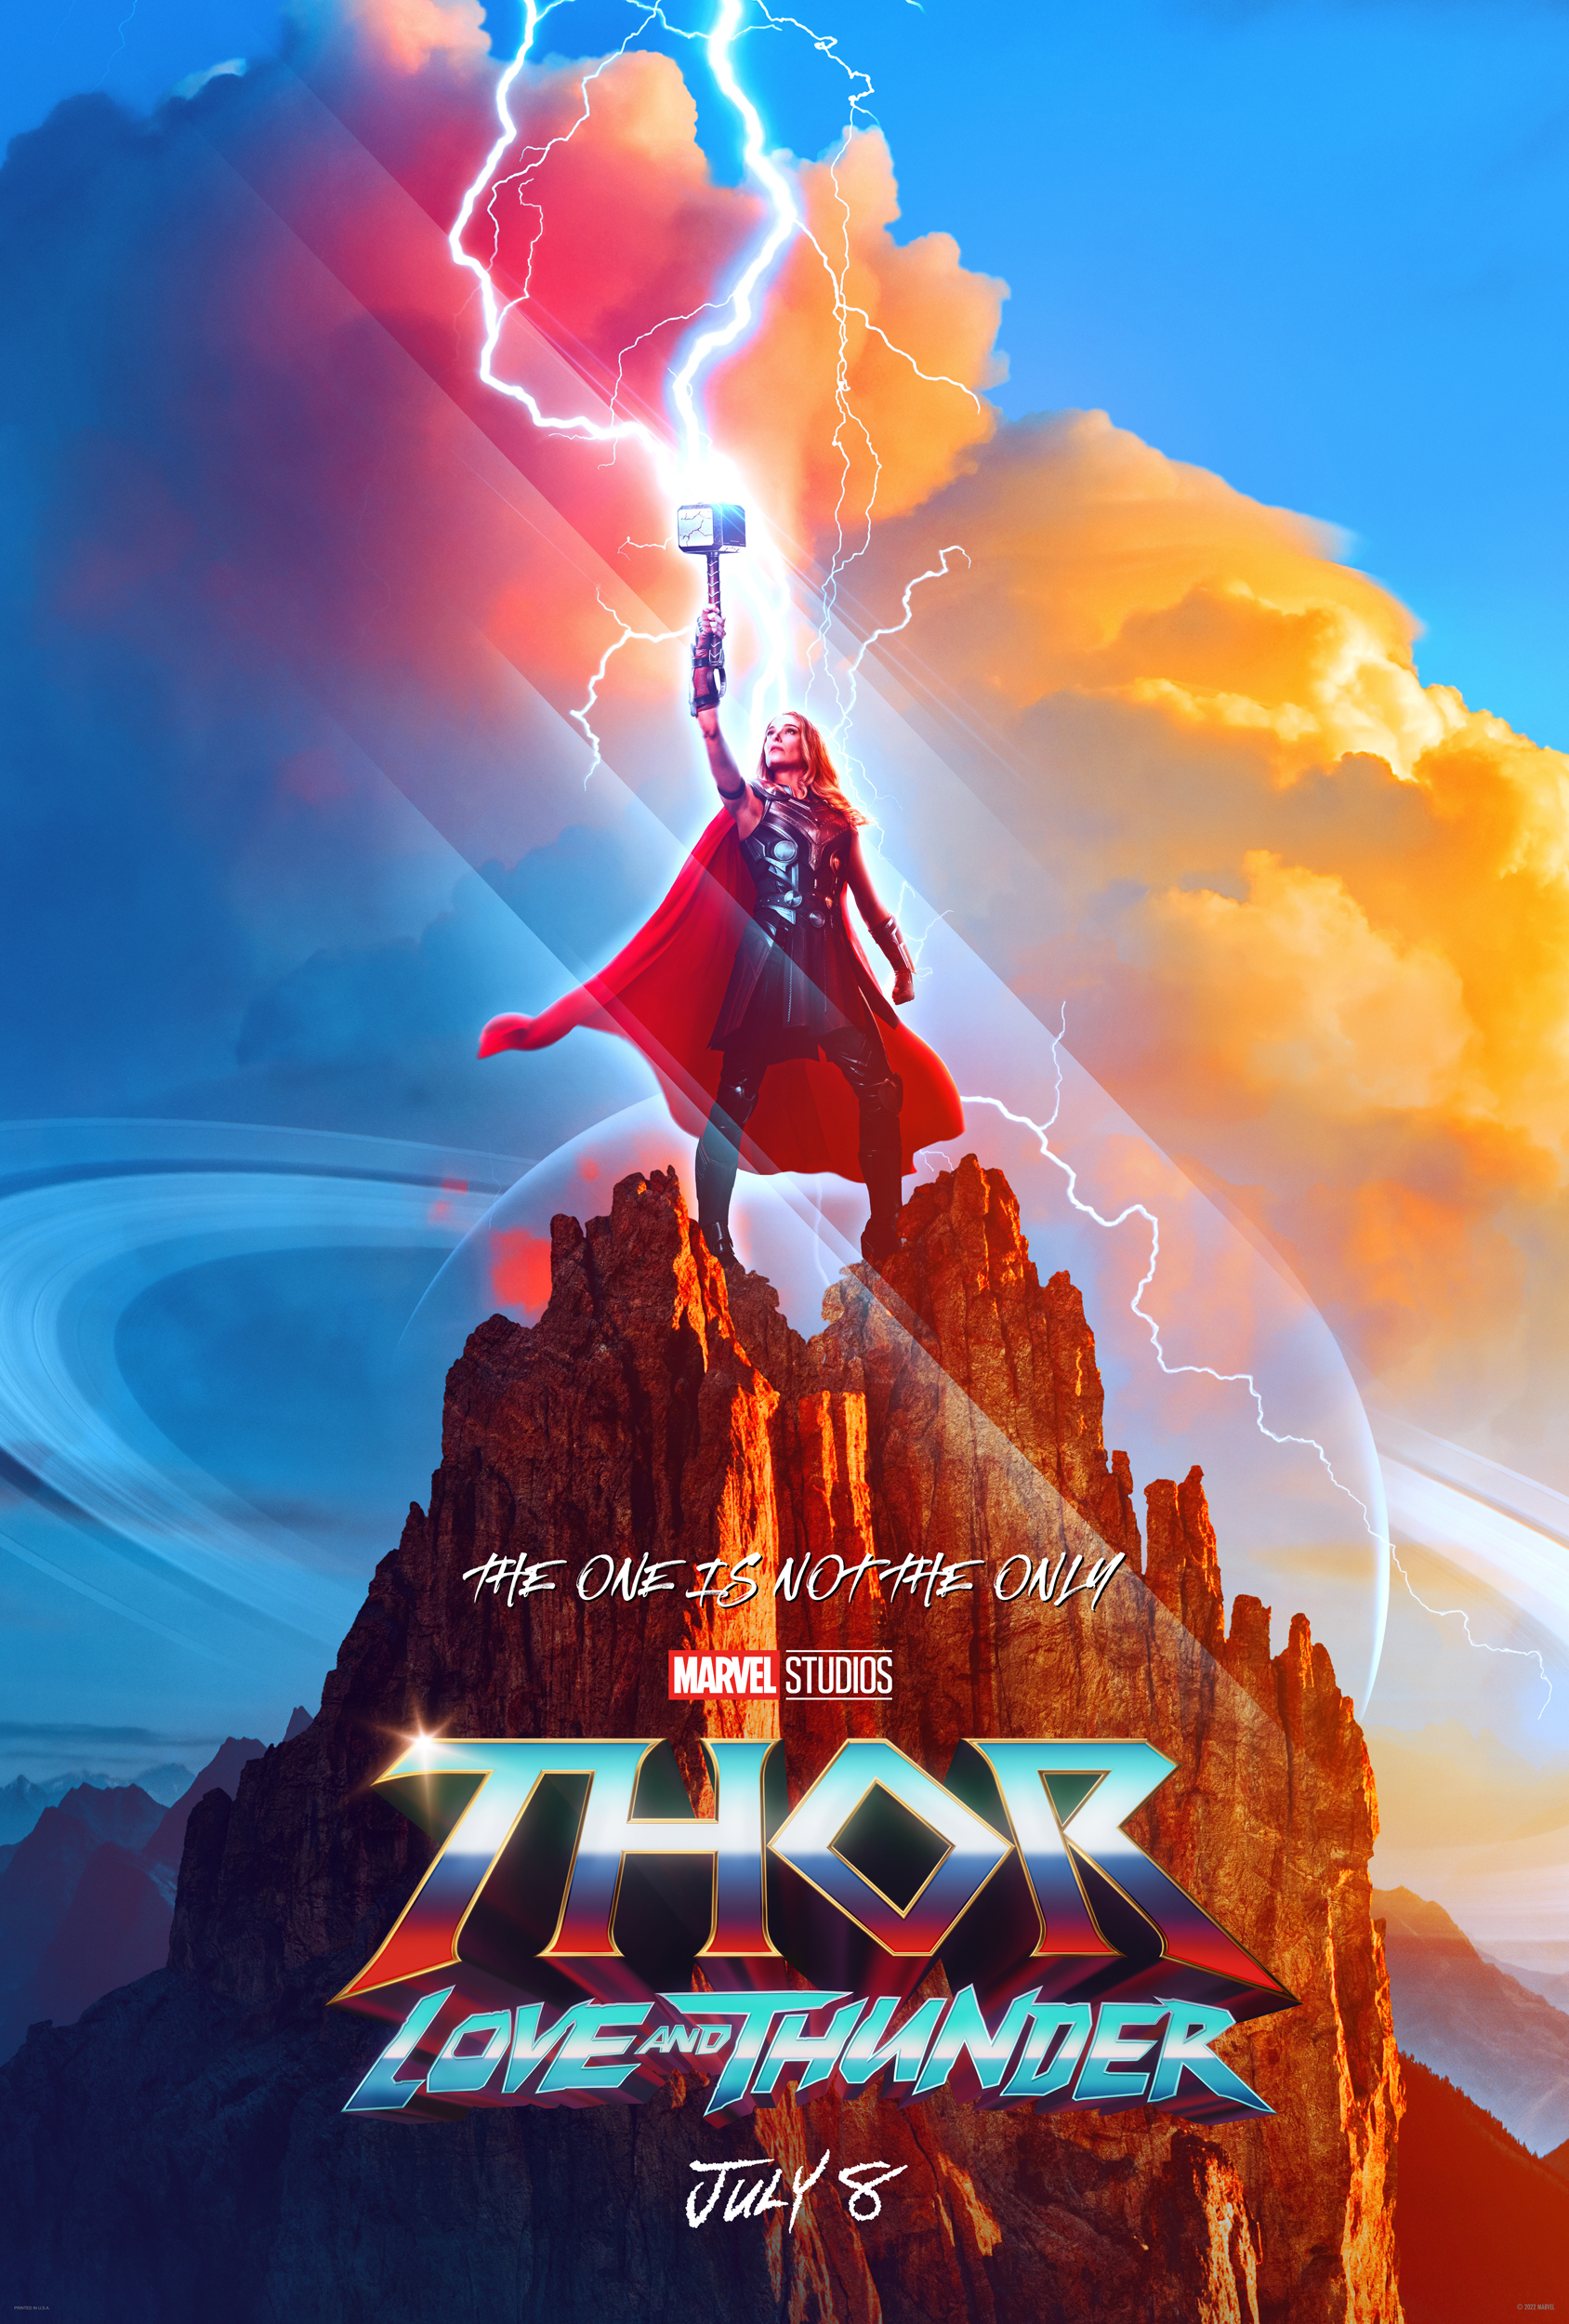 Editor Roundtable: Thor: Ragnarok